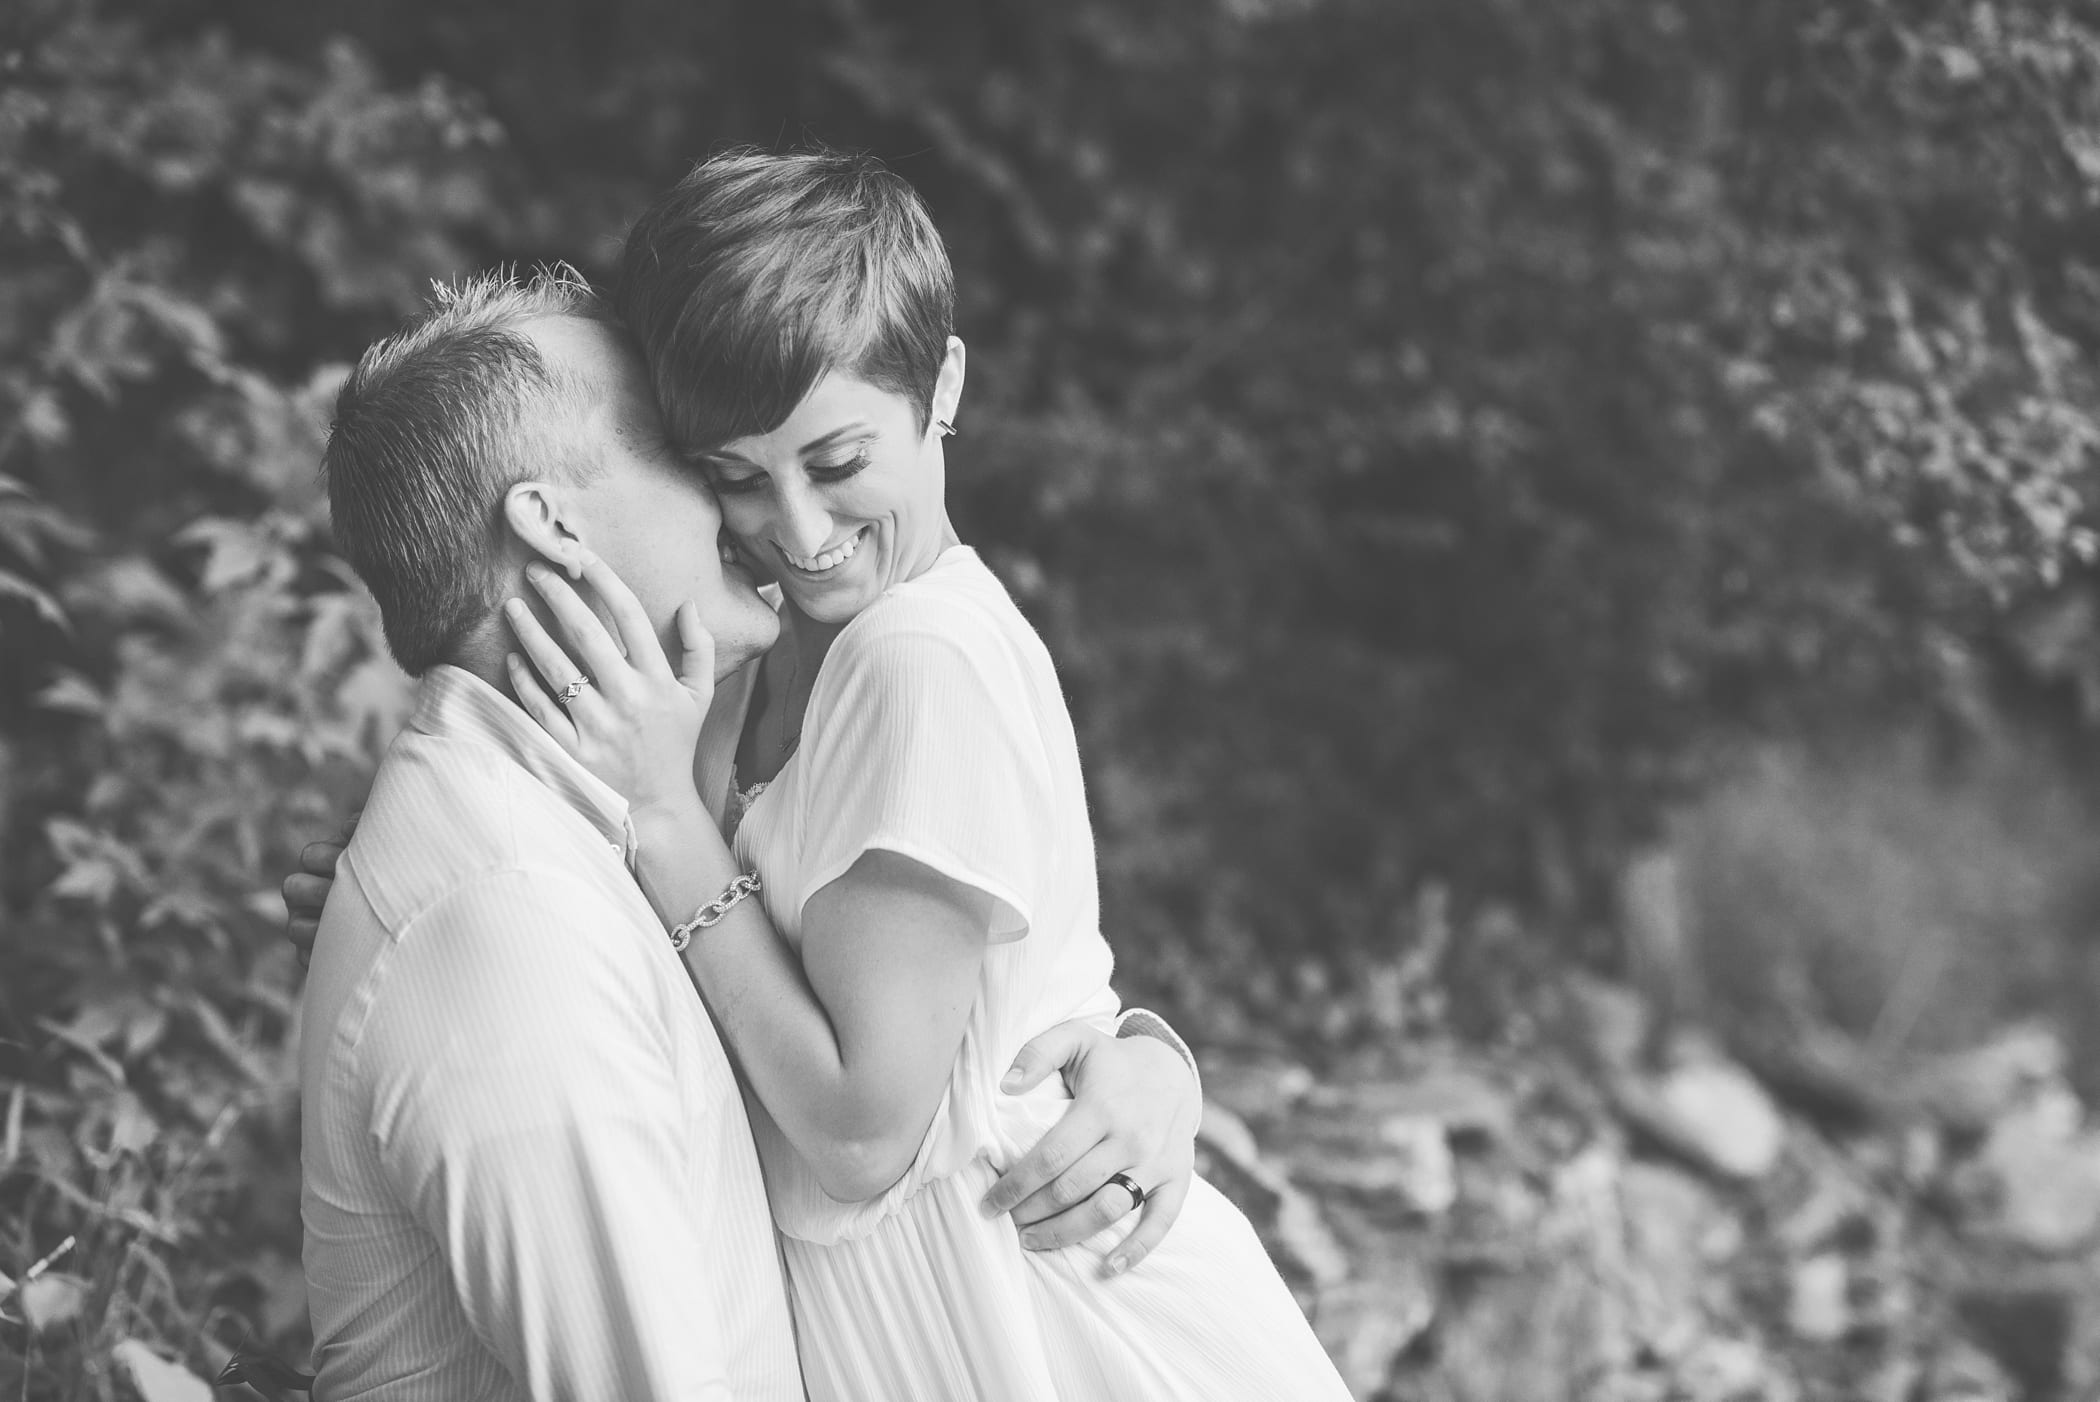 Michelle & Logan | Idaho Falls Wedding Photographer and Videographer